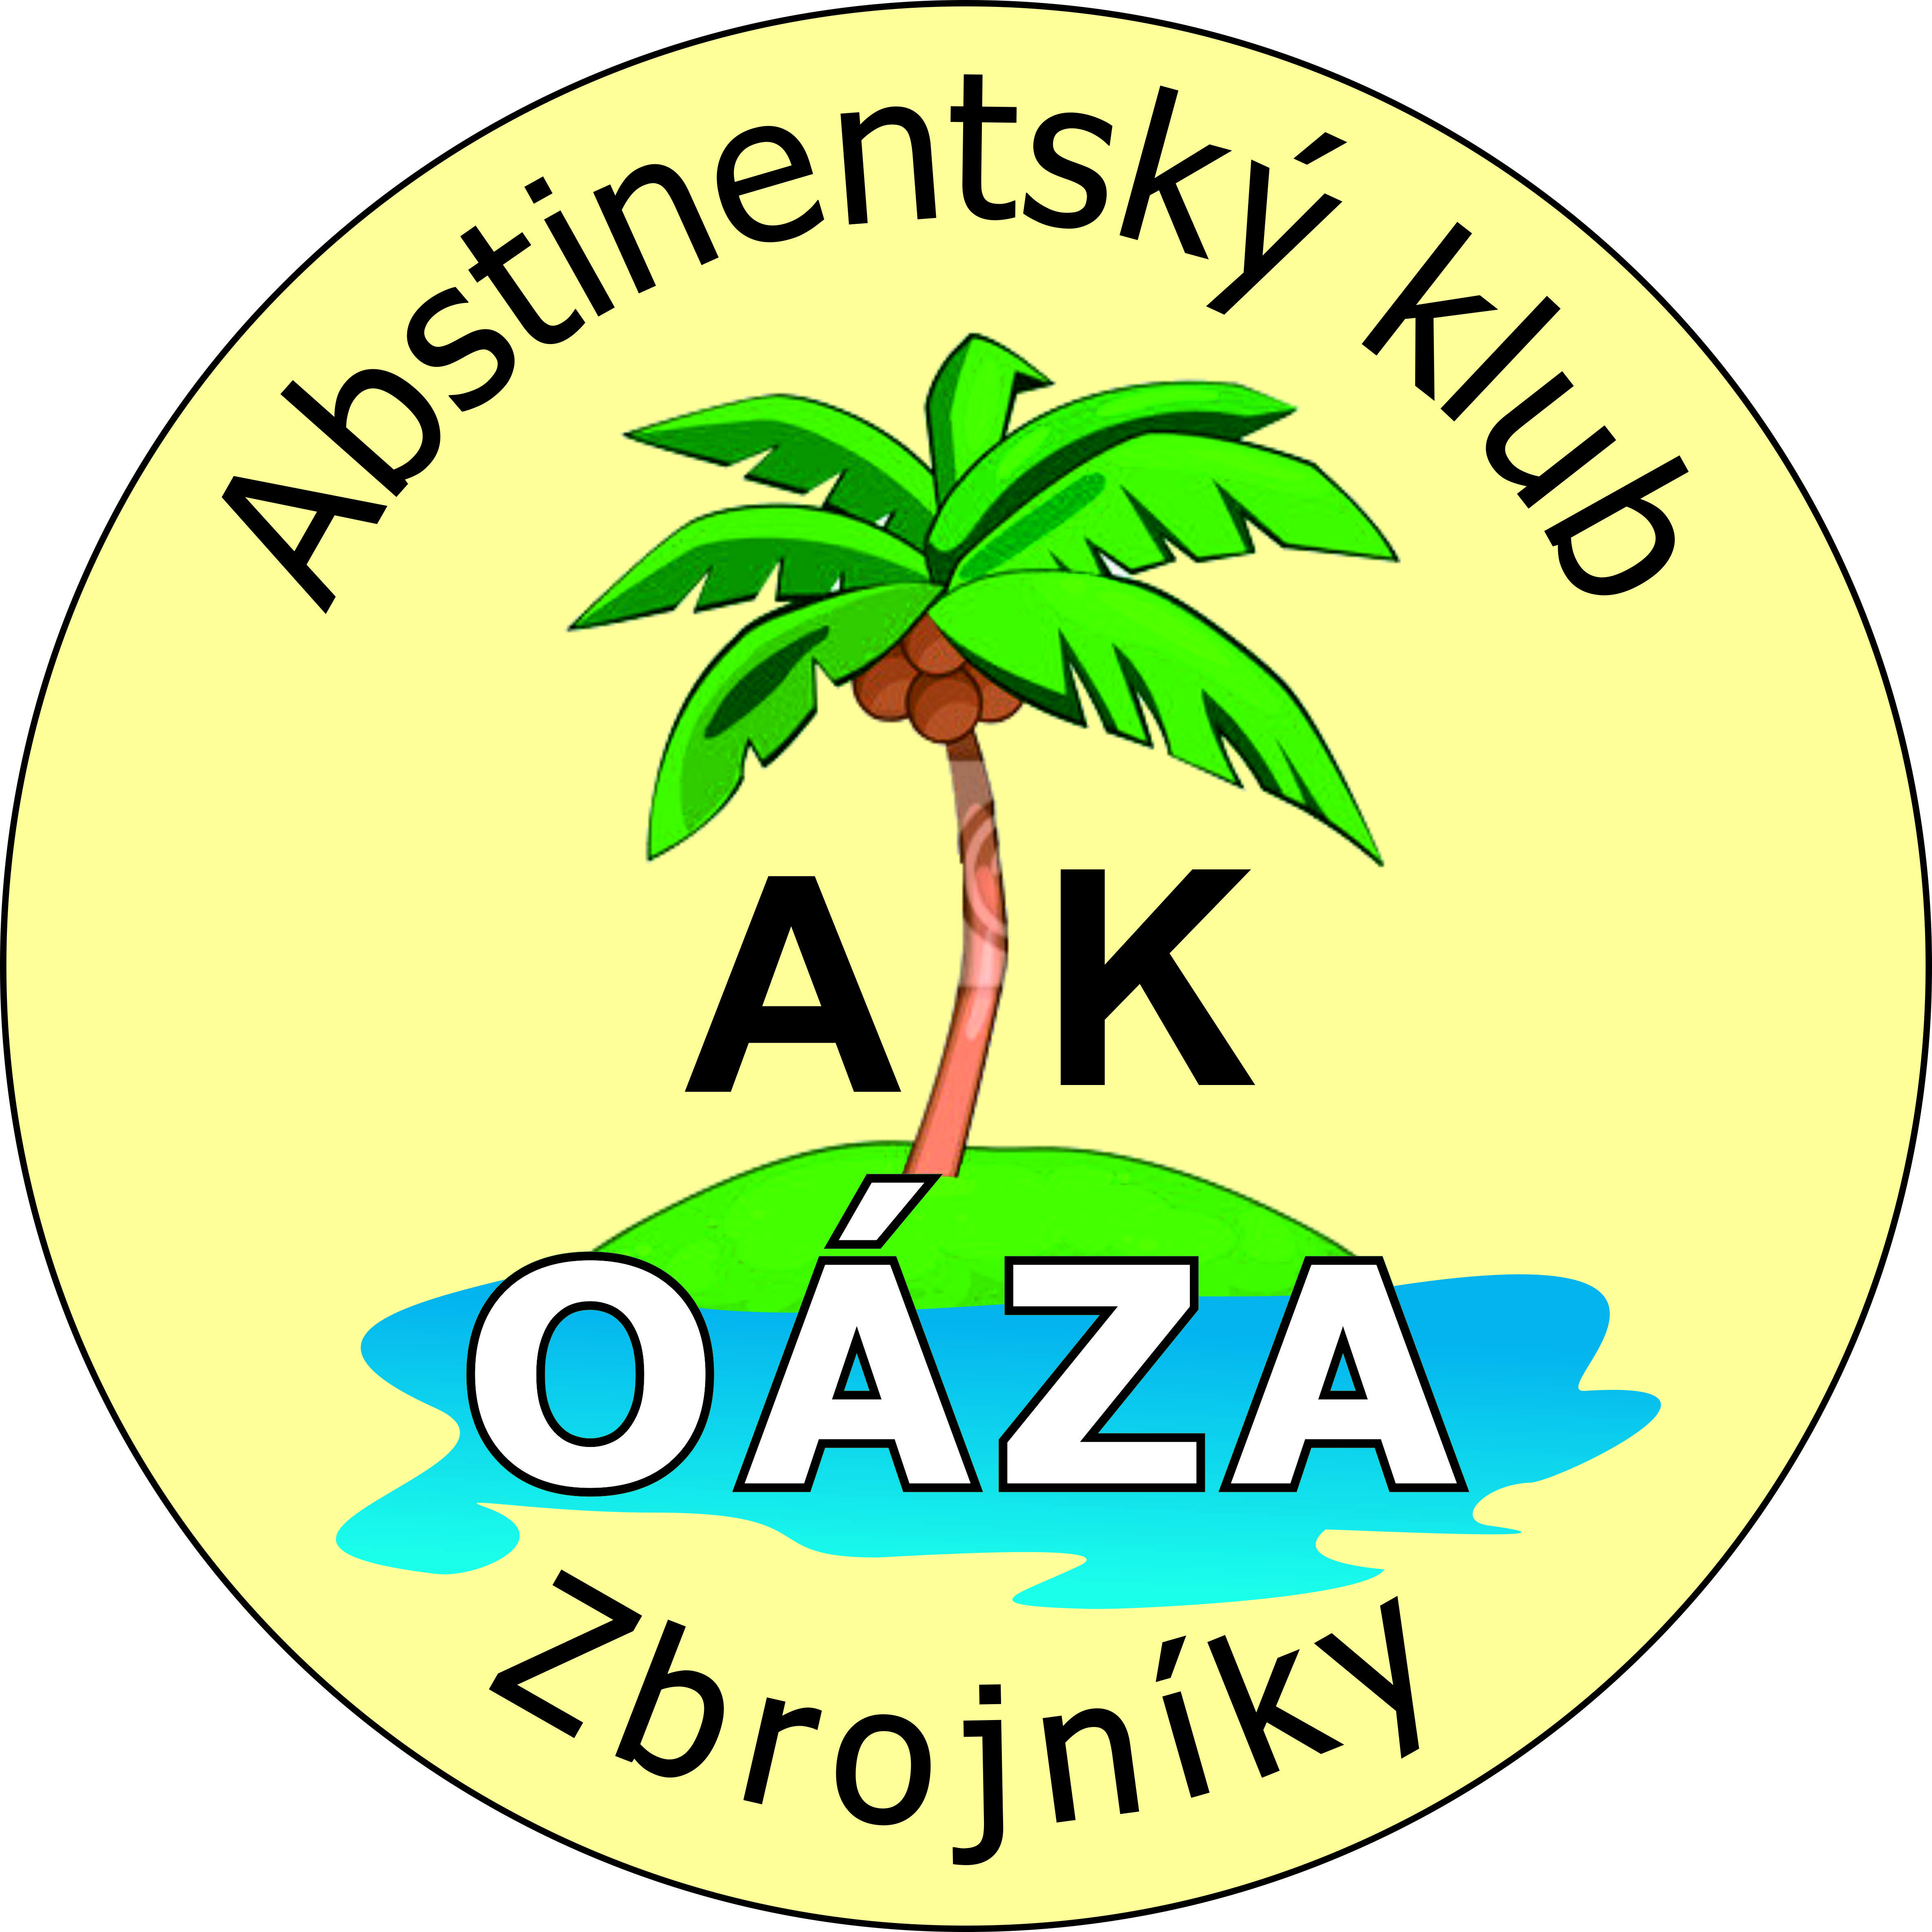 abstinensky_kulub_oaza.jpg - 1.58 MB